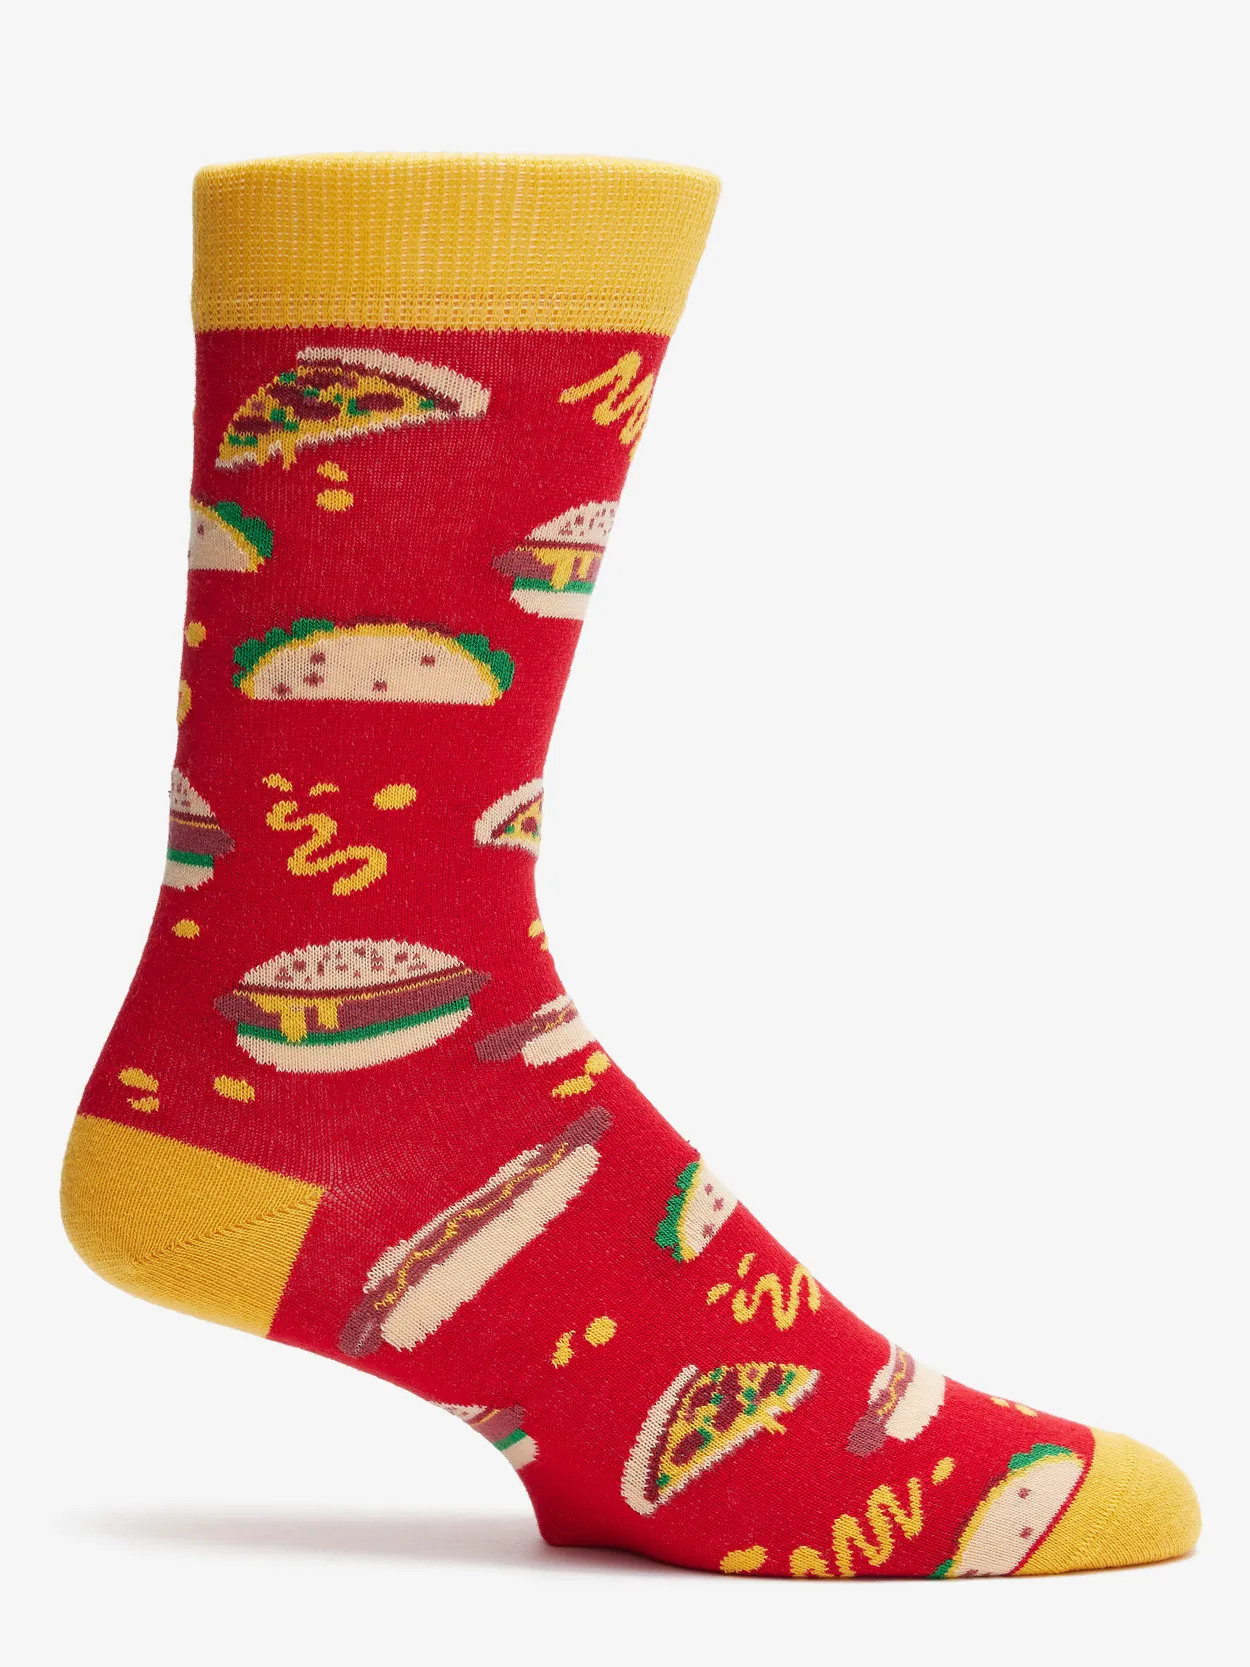 Socks Belize Red & Yellow